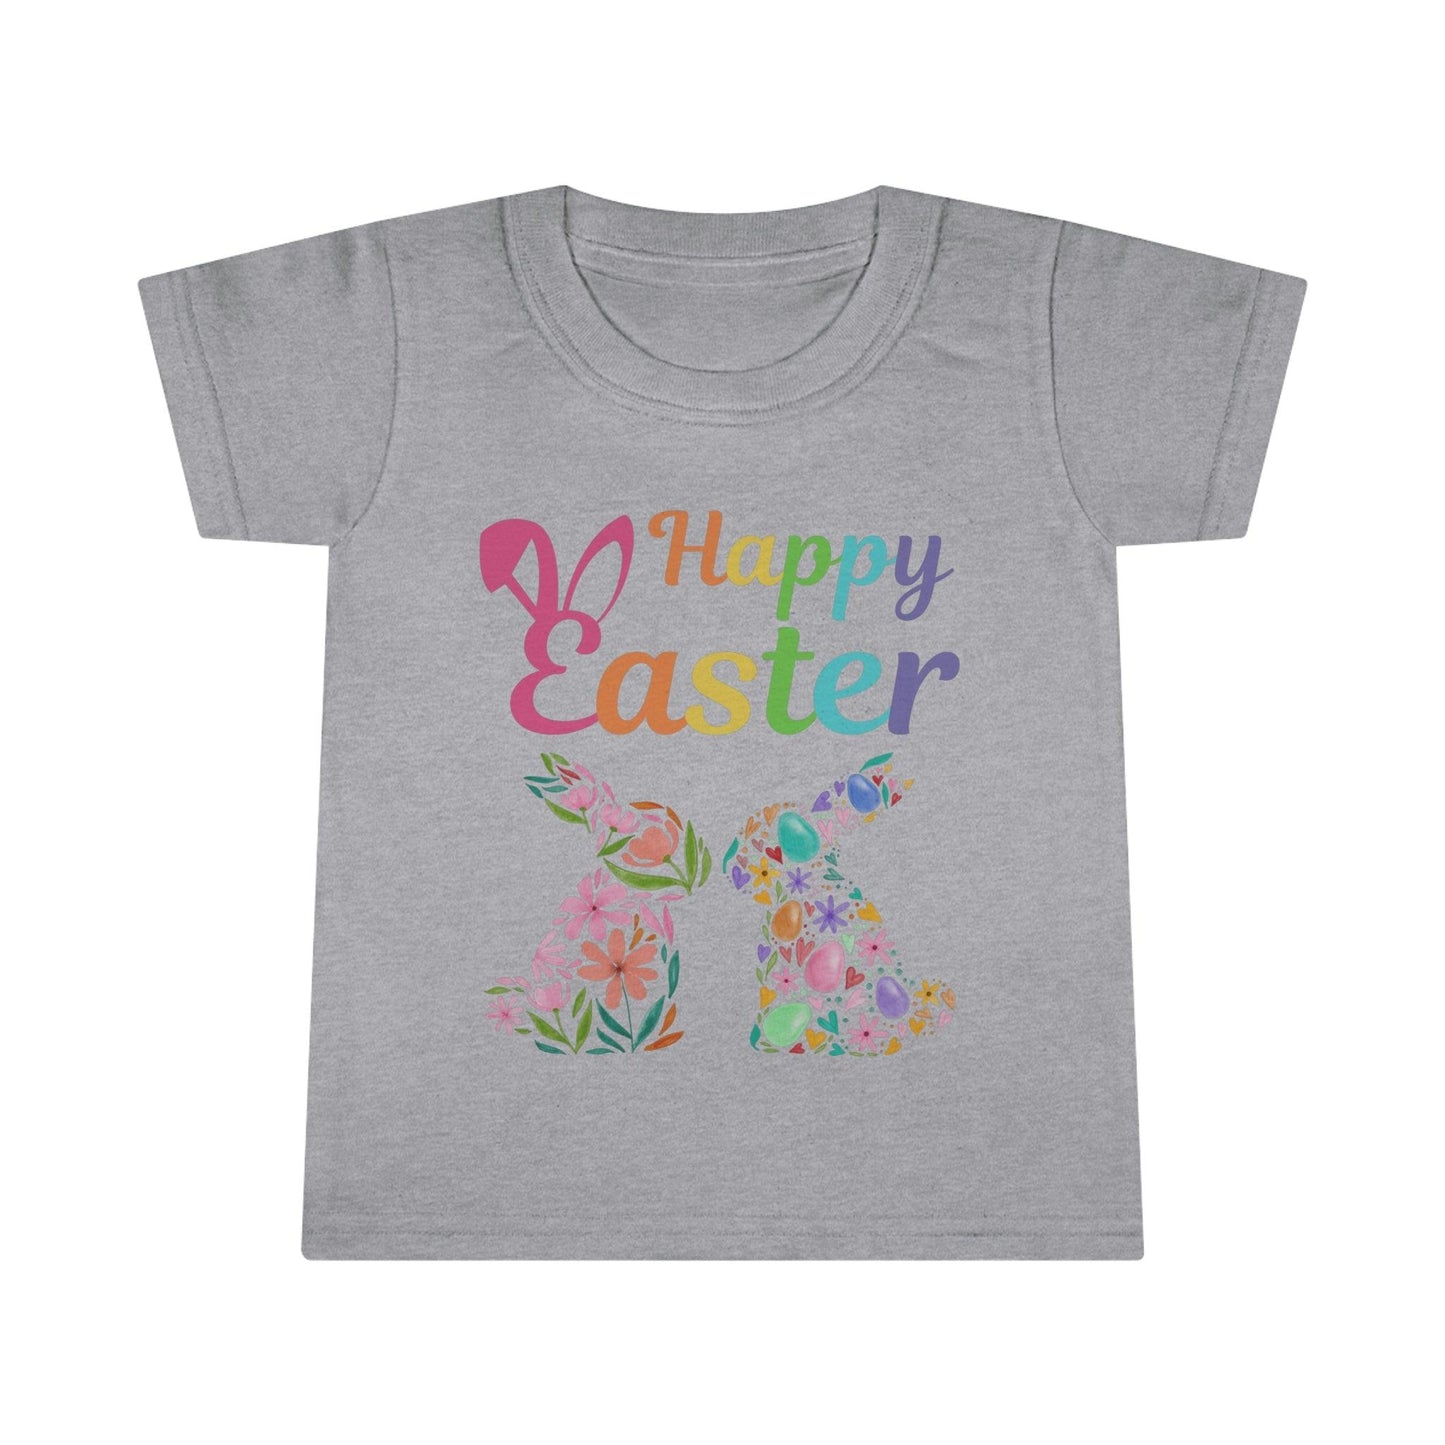 Baby girl easter shirt Baby boy easter shirt, toddler easter T-shirt baby easter outfit for first communion gift